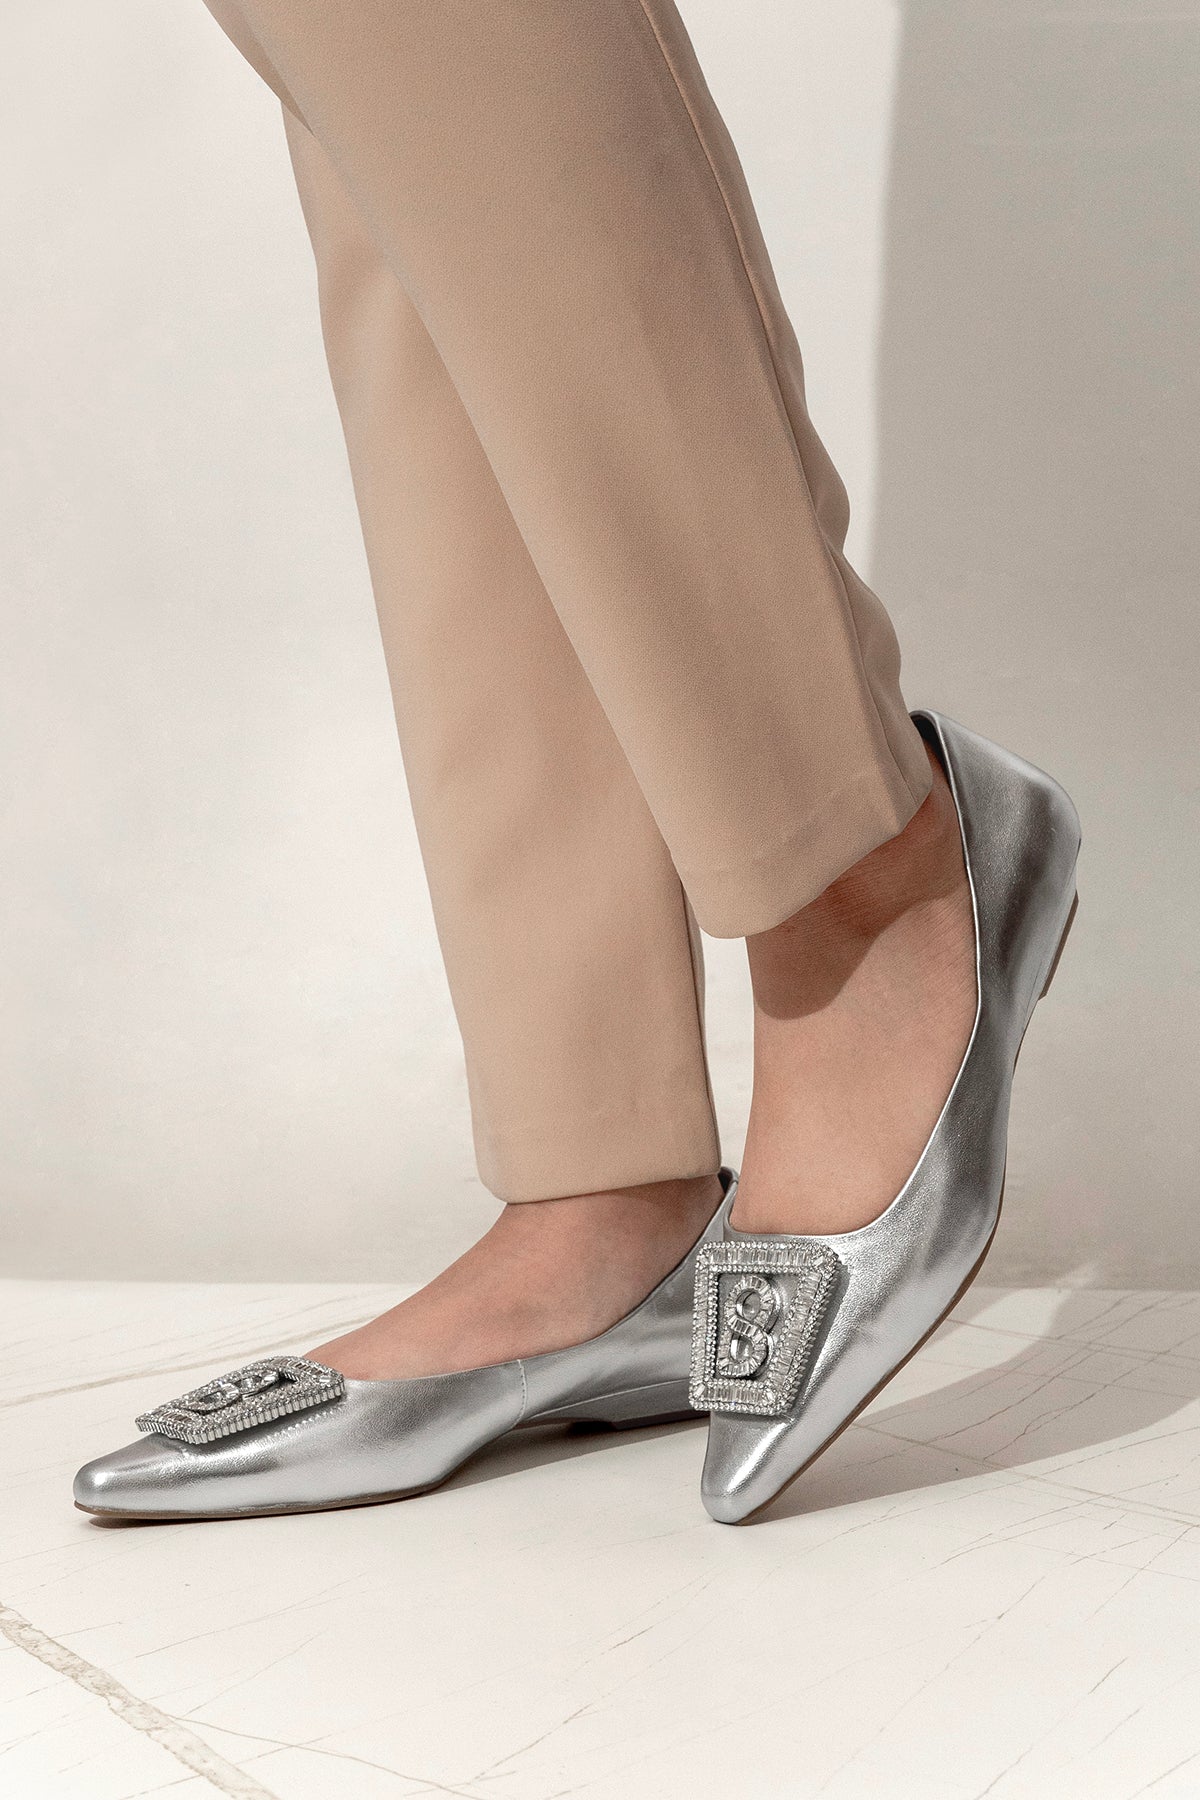 Lavish Shoes - Silver